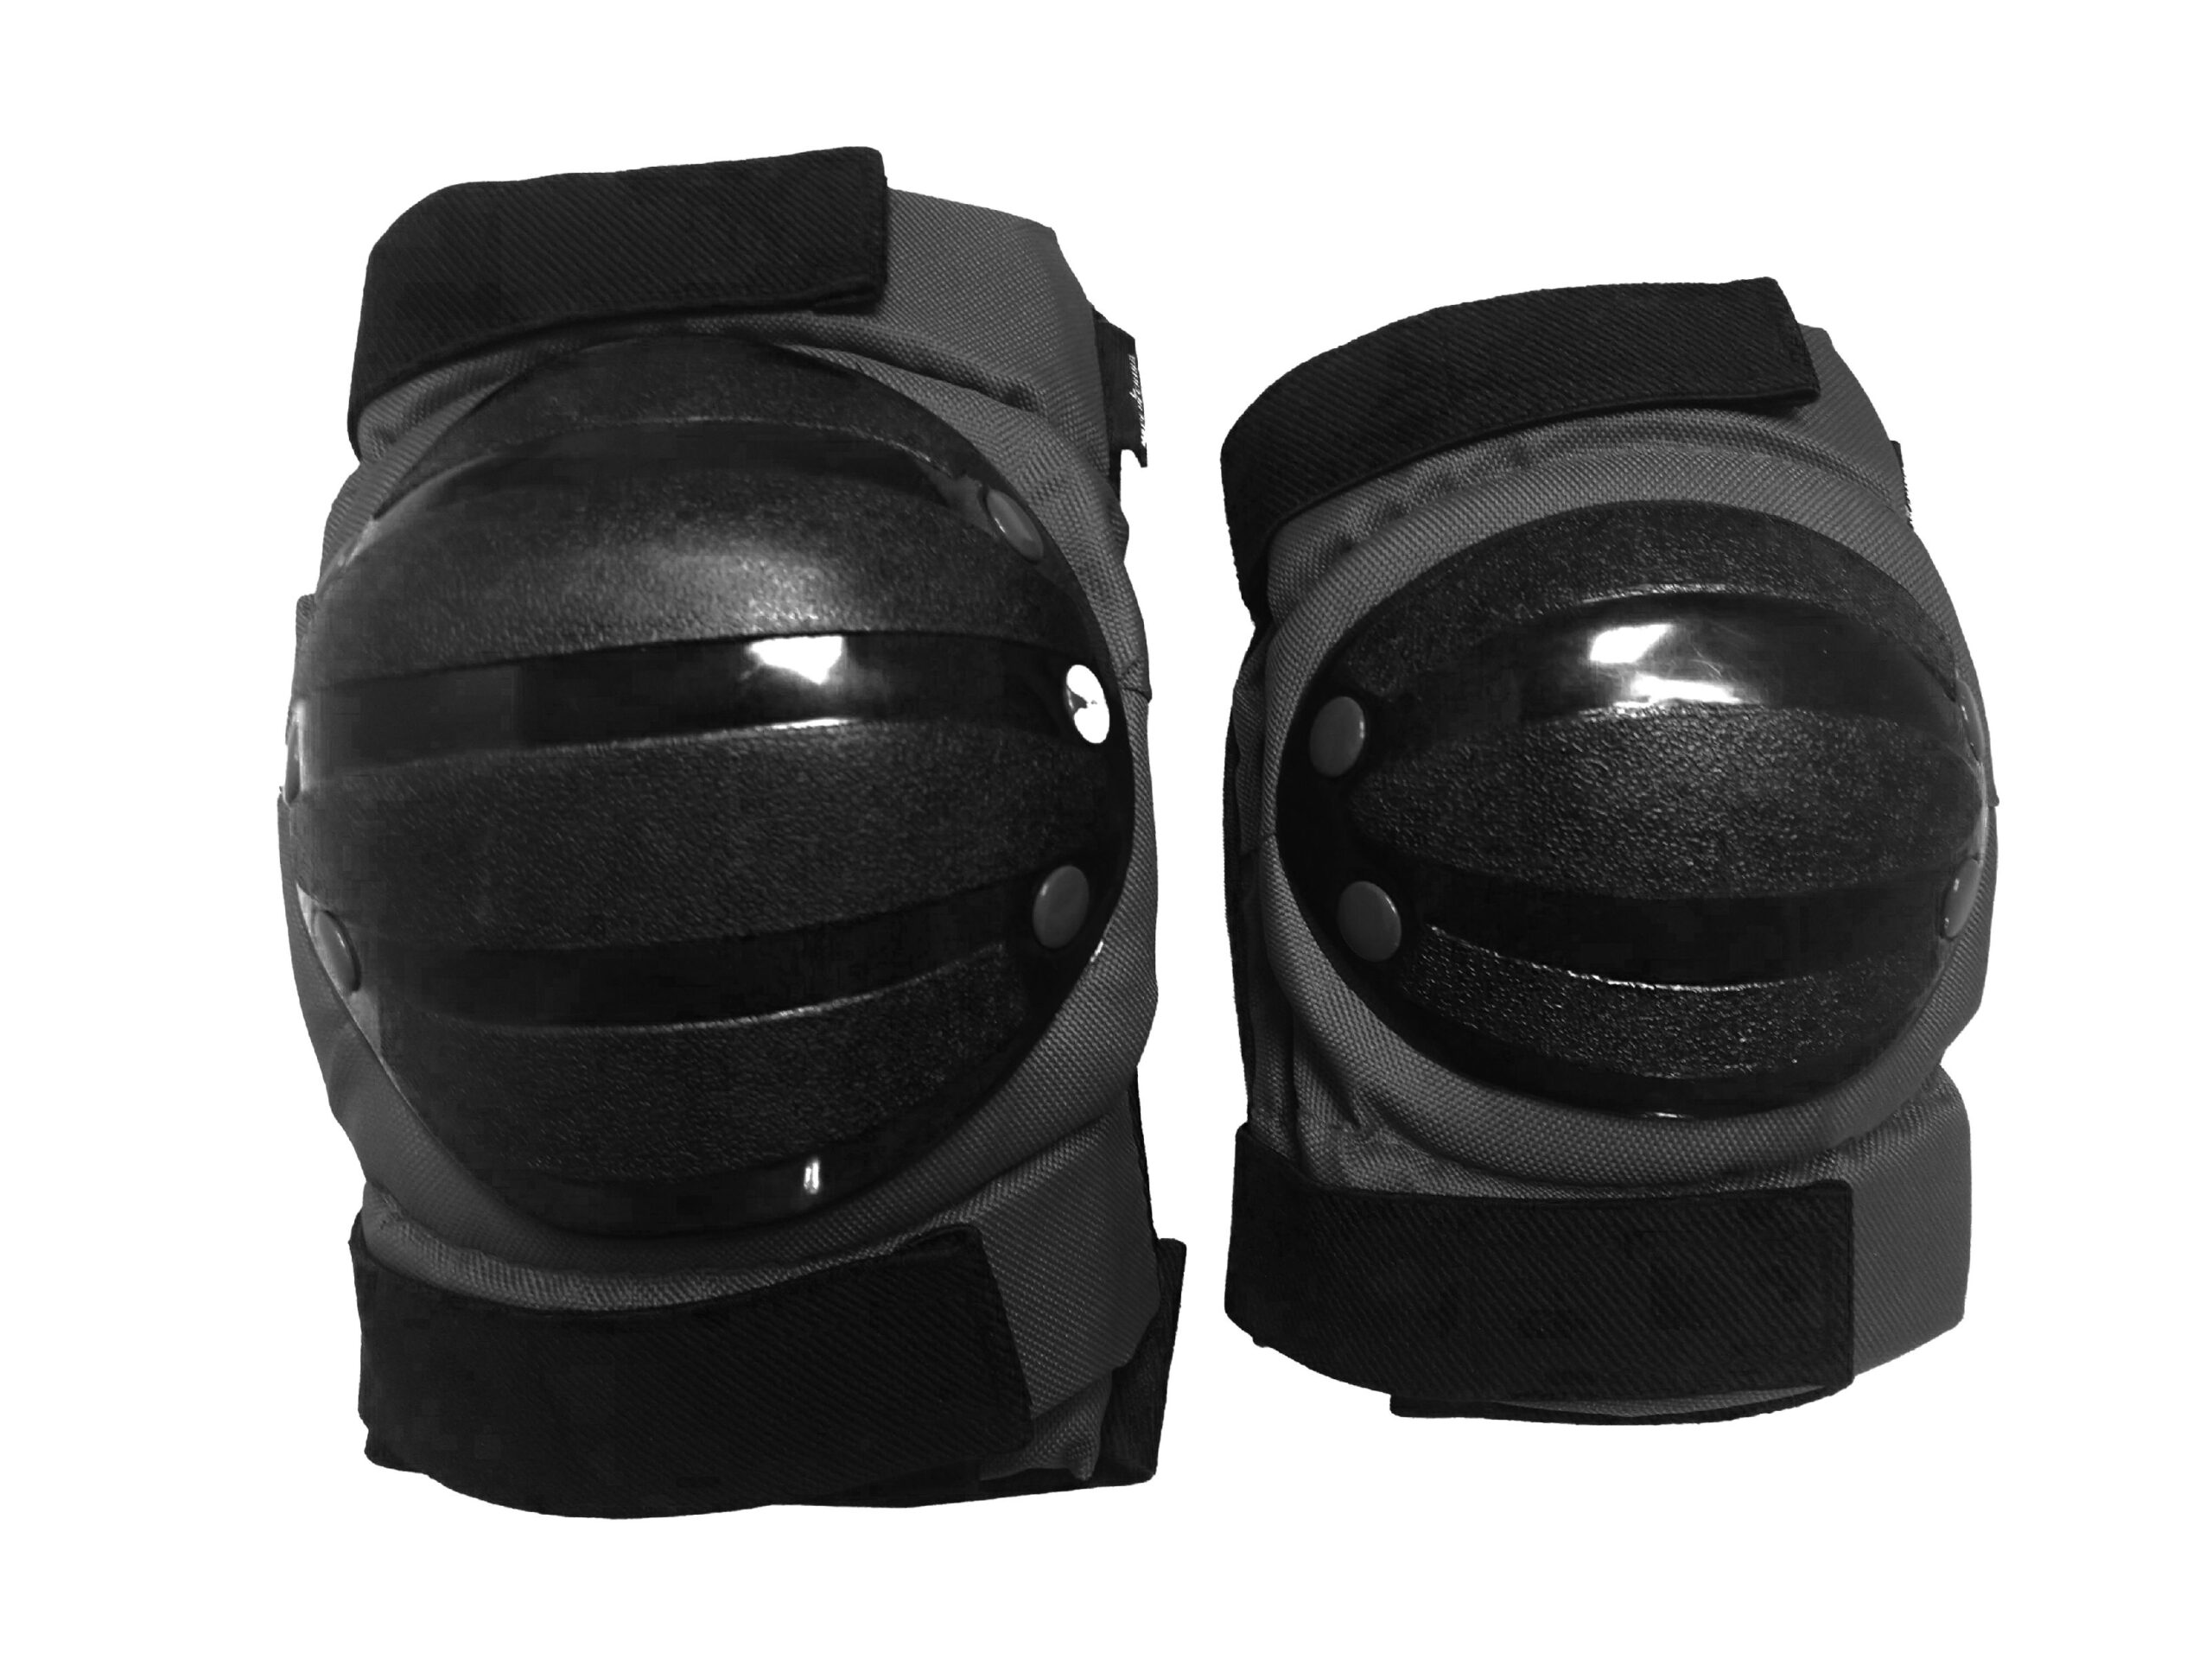 GTPADMZ Greytek Medium Black Elbow & Knee Pad Set